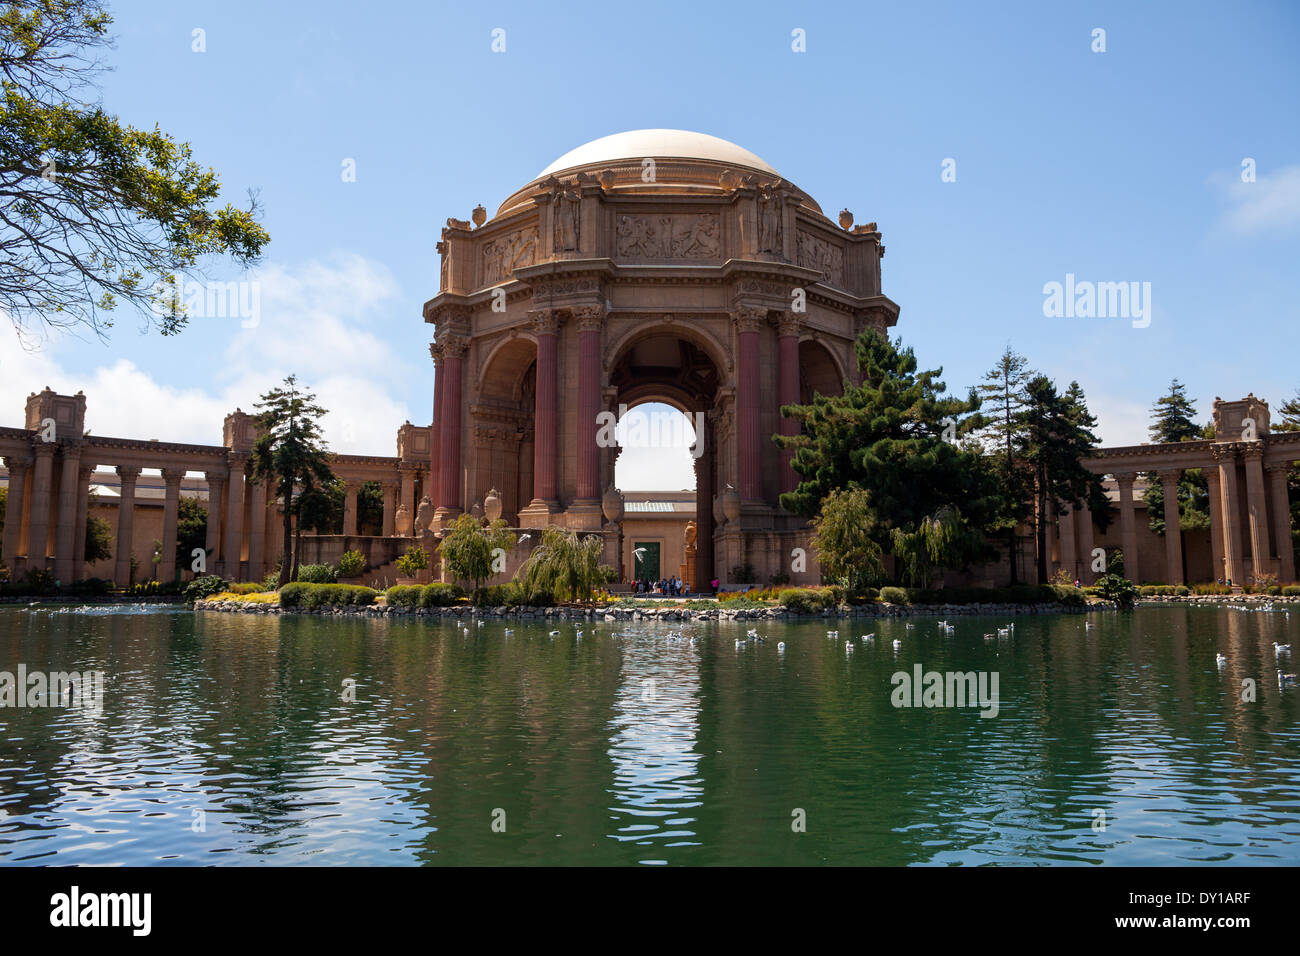 The Palace of Fine Arts, San Francisco, California, USA. Stock Photo